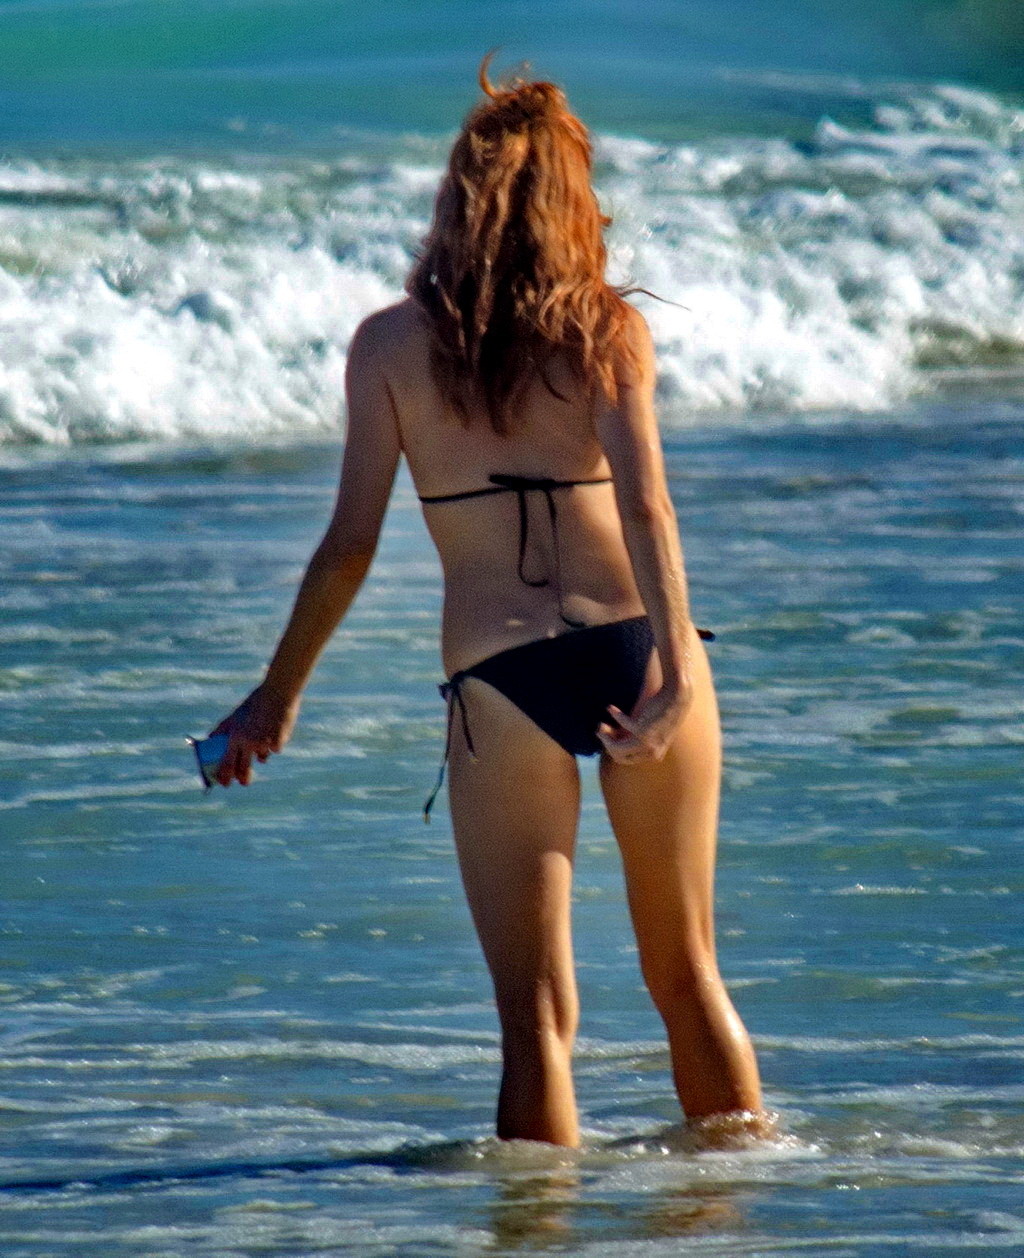 Sienna Miller wearing a black bikini on a beach in Mexico #75206904